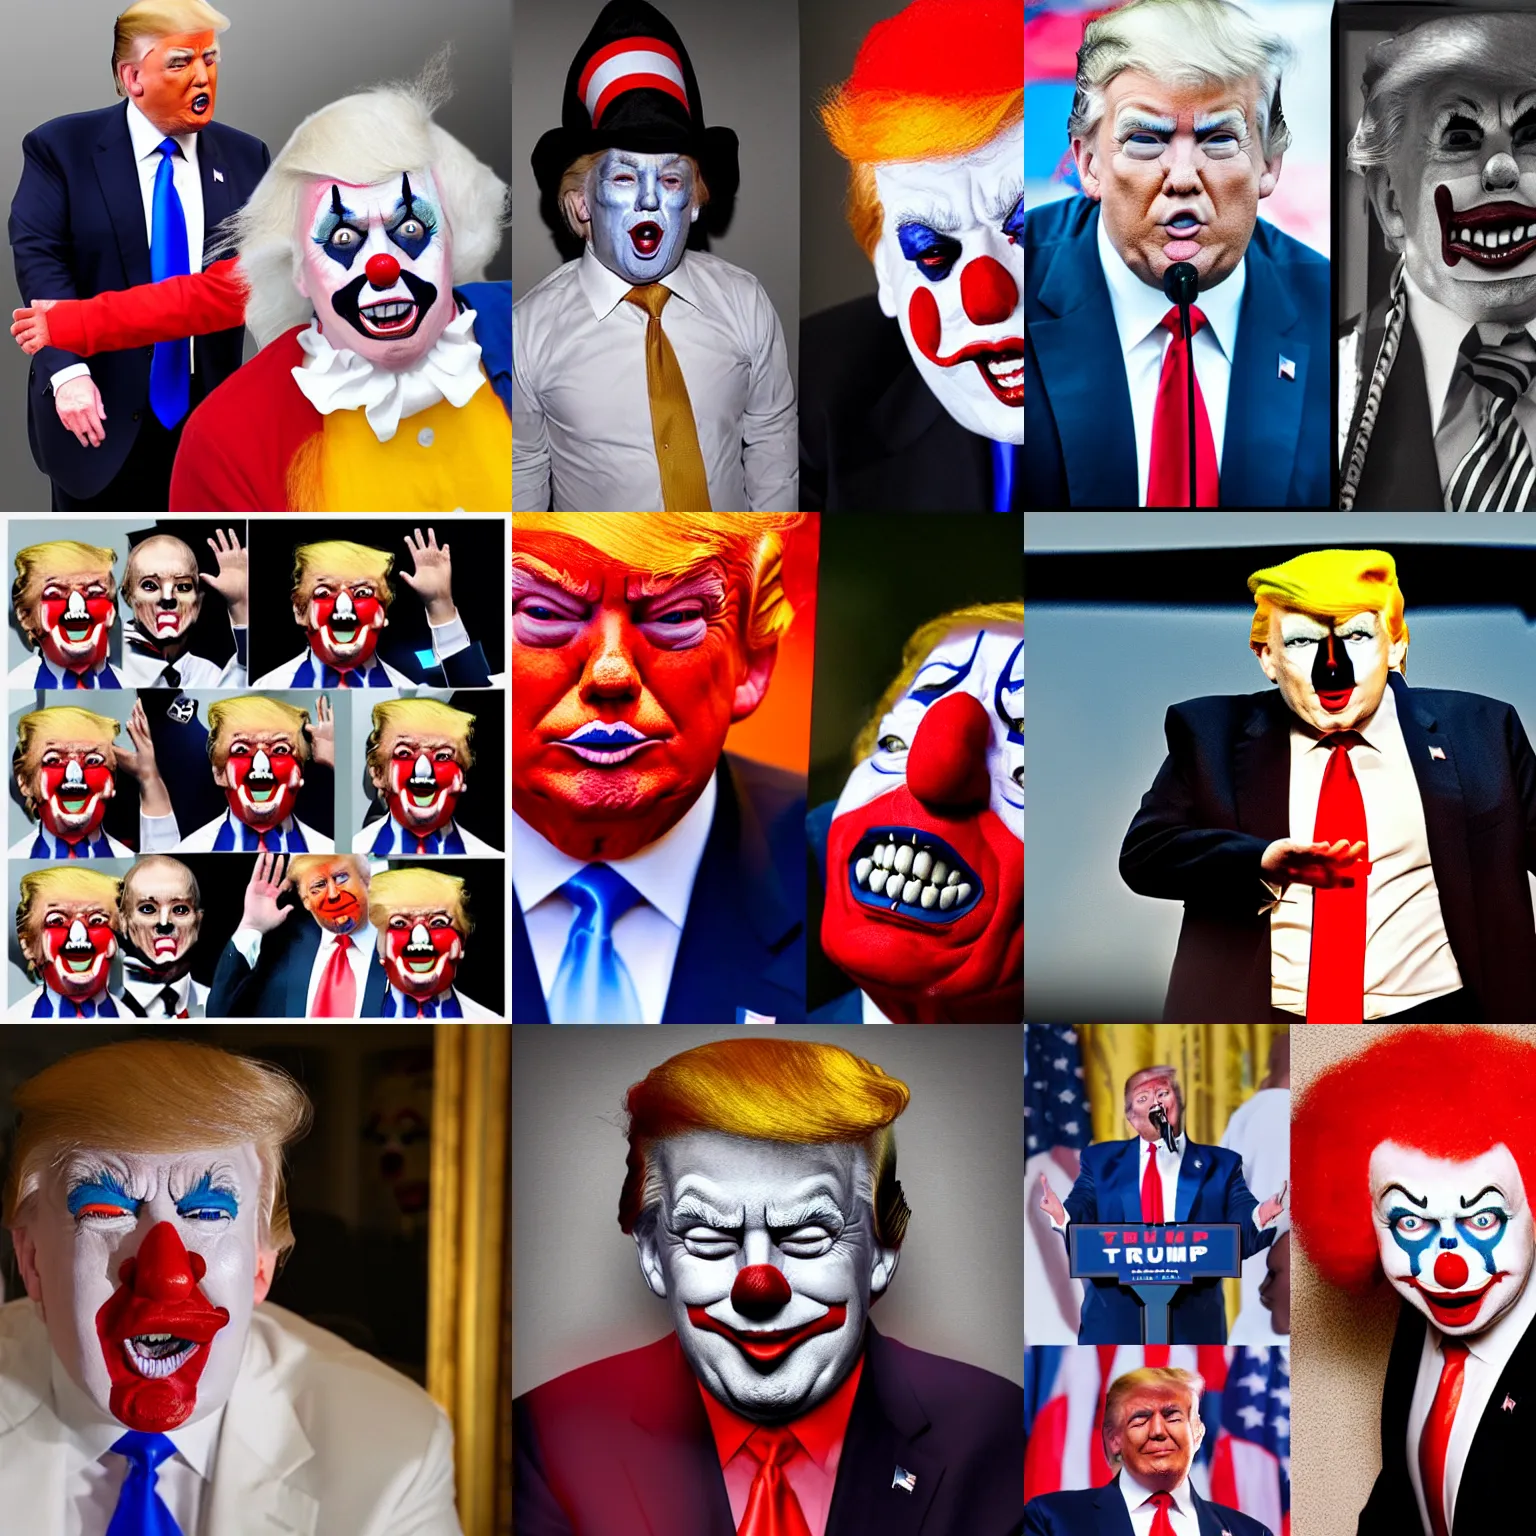 Prompt: donald trump as creepy clown